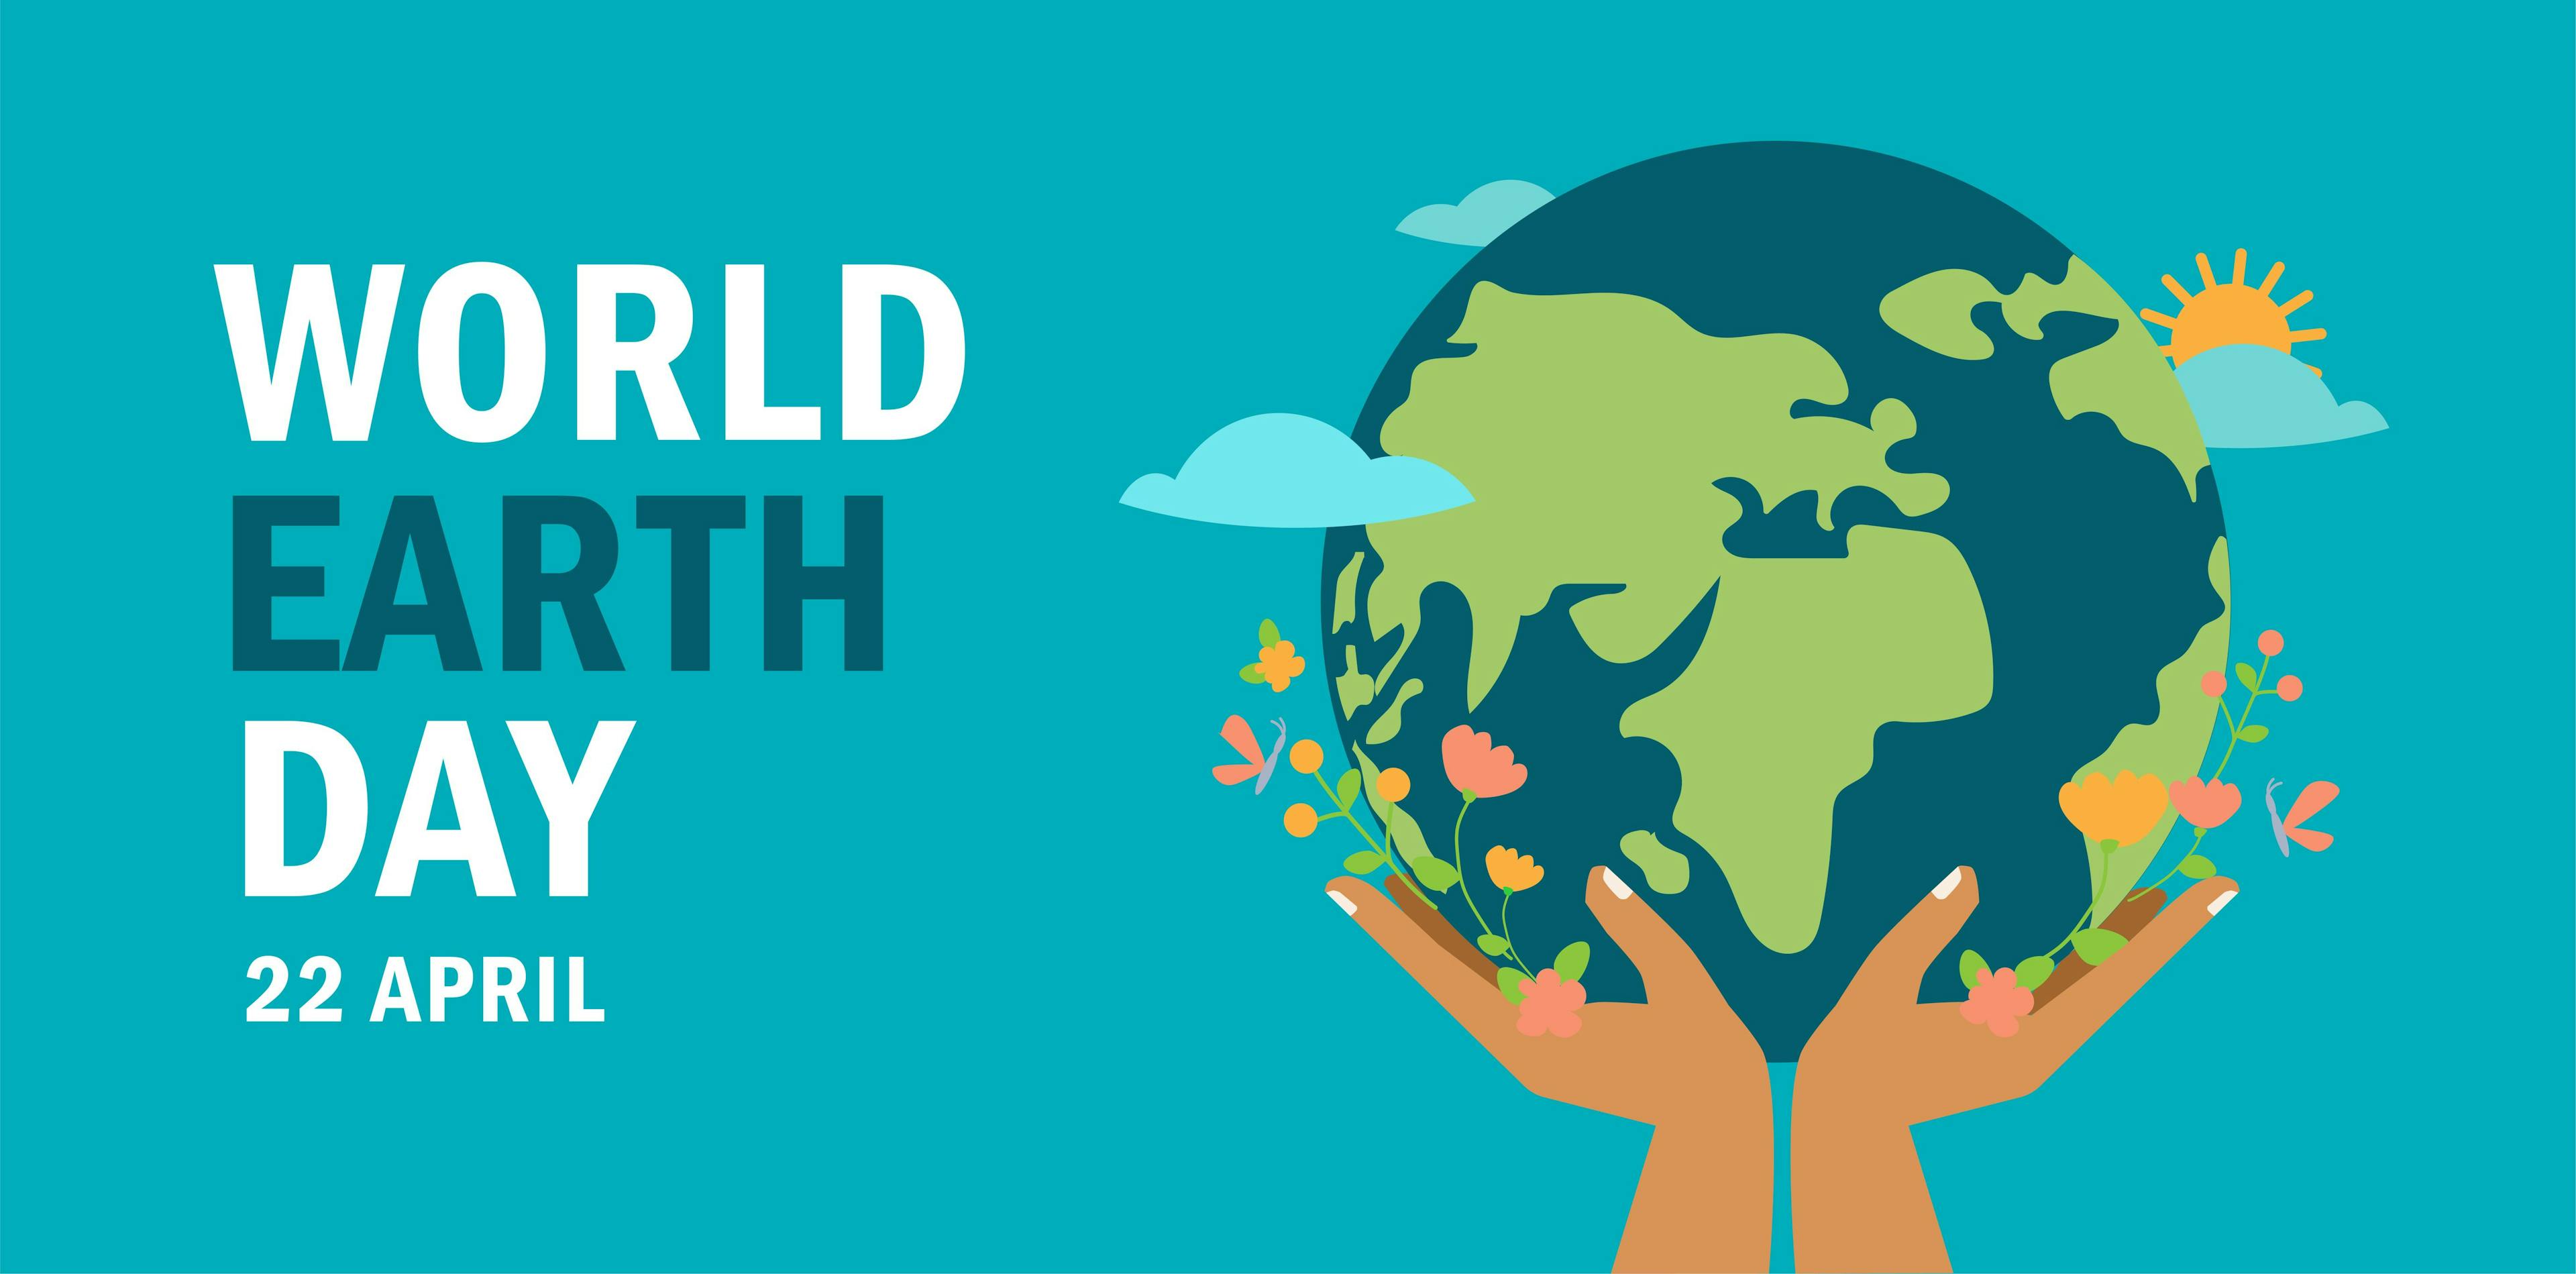 World earth day concept, hands holding globe | Image Credit: © danijelala - stock.adobe.com